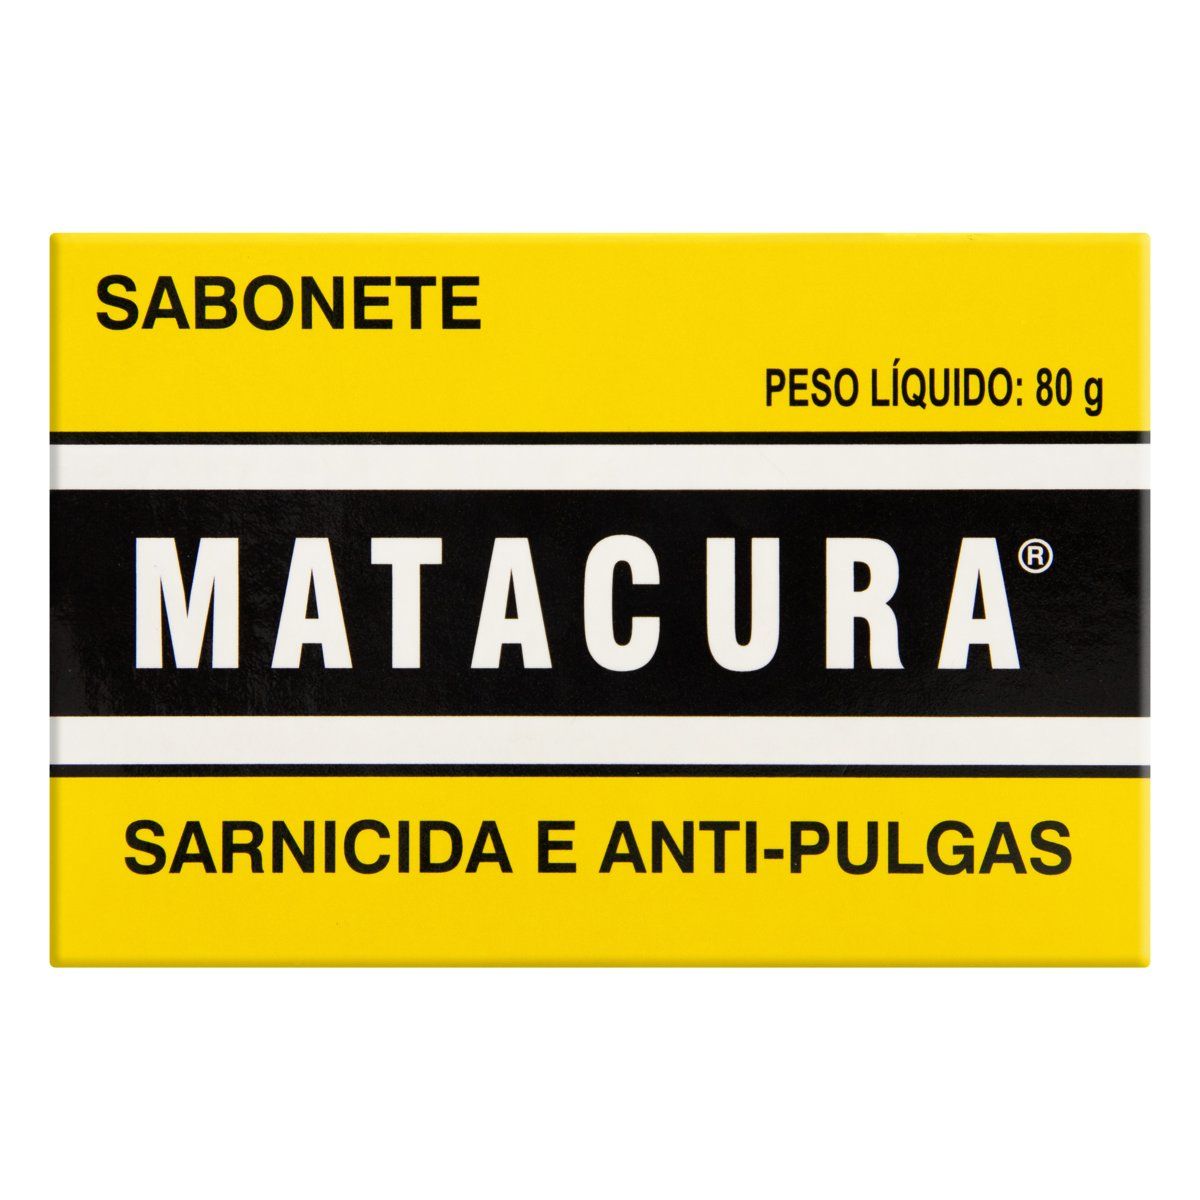 Sabonete Uso Veterinário Matacura Sarnicida e Anti-Pulgas 80g